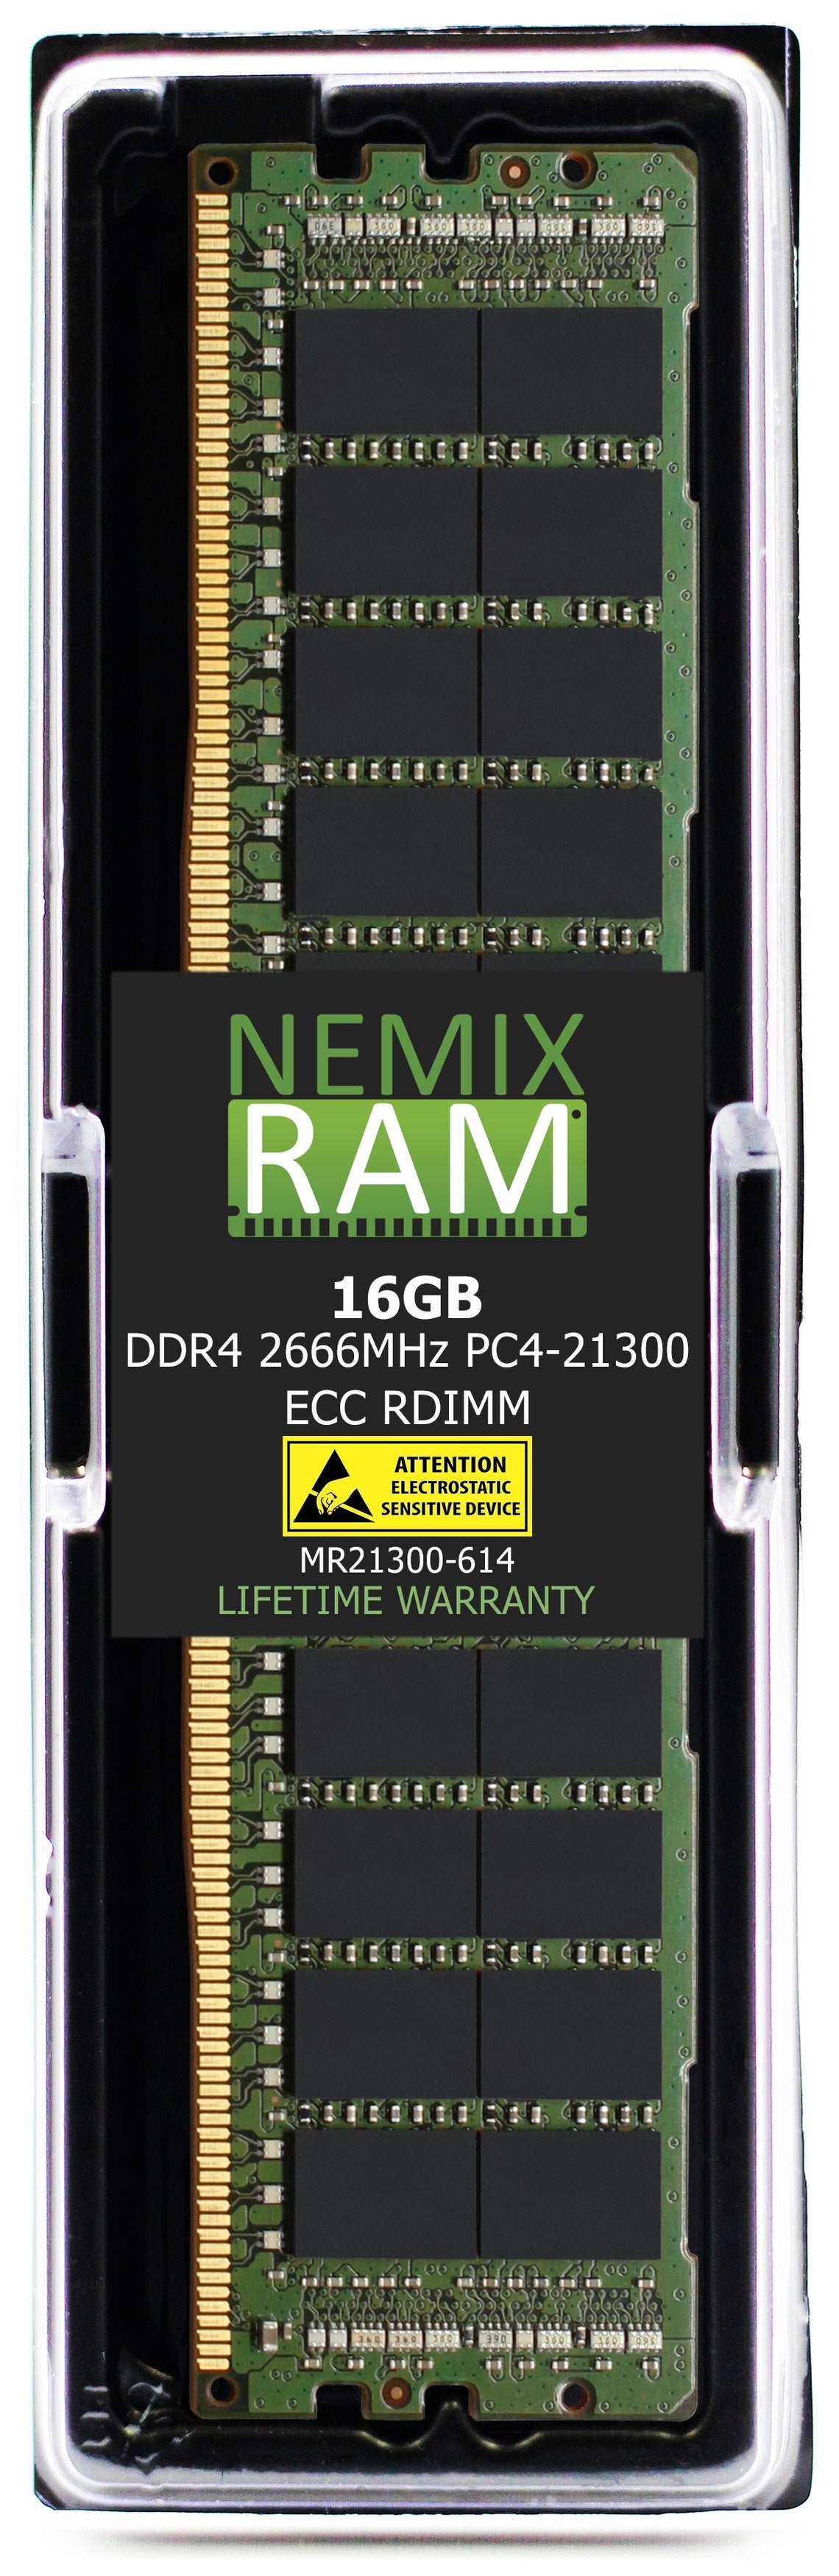 16GB DDR4 2666MHZ PC4-21300 RDIMM Compatible with Supermicro MEM-DR416L-SL02-ER29